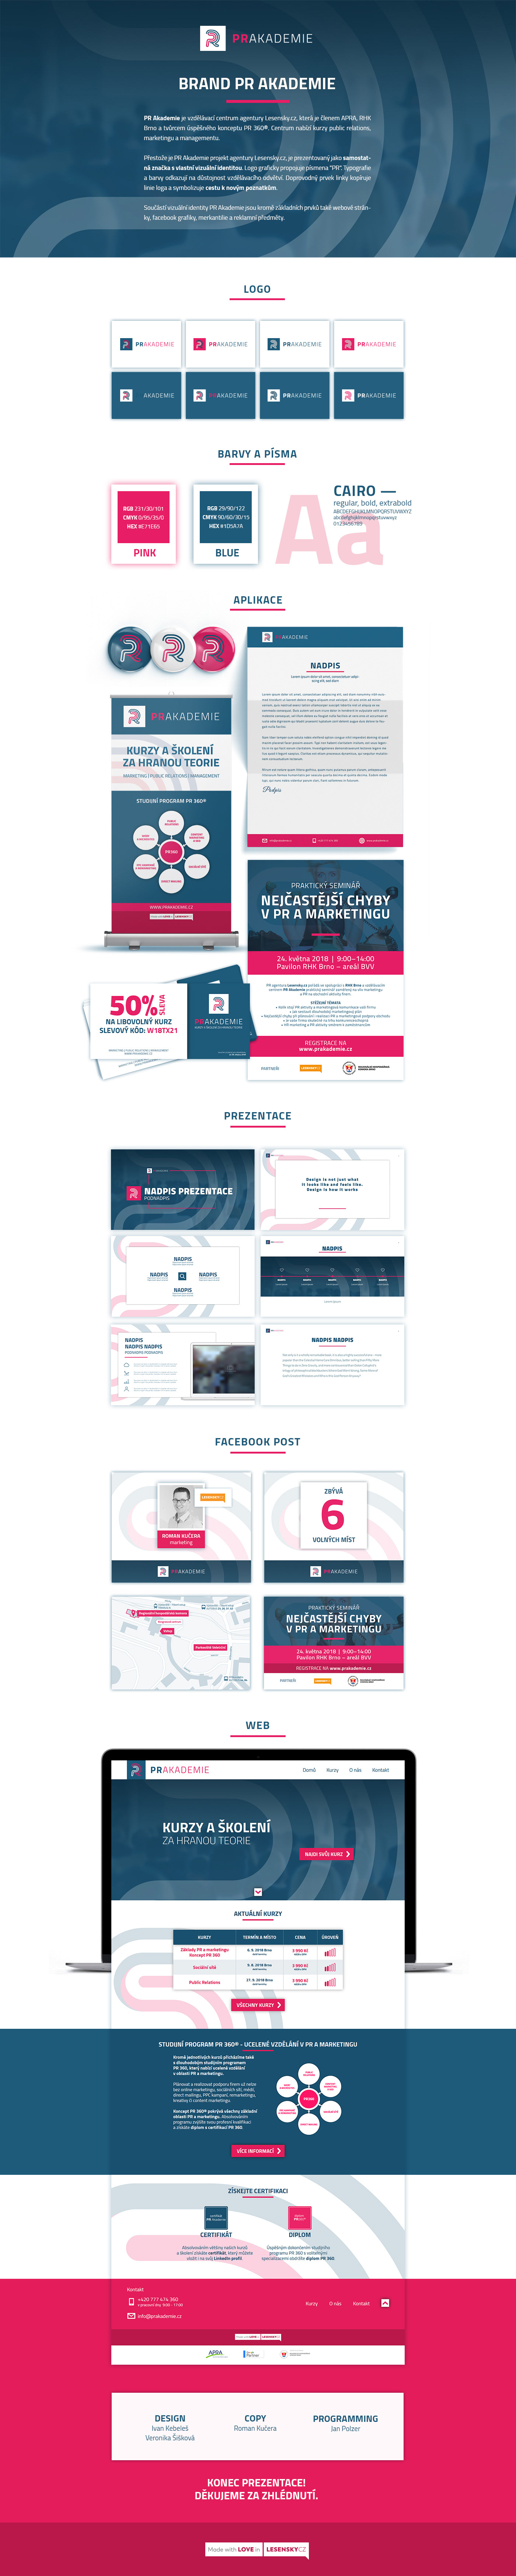 pr public relations brand design academy Website pink blue graphic